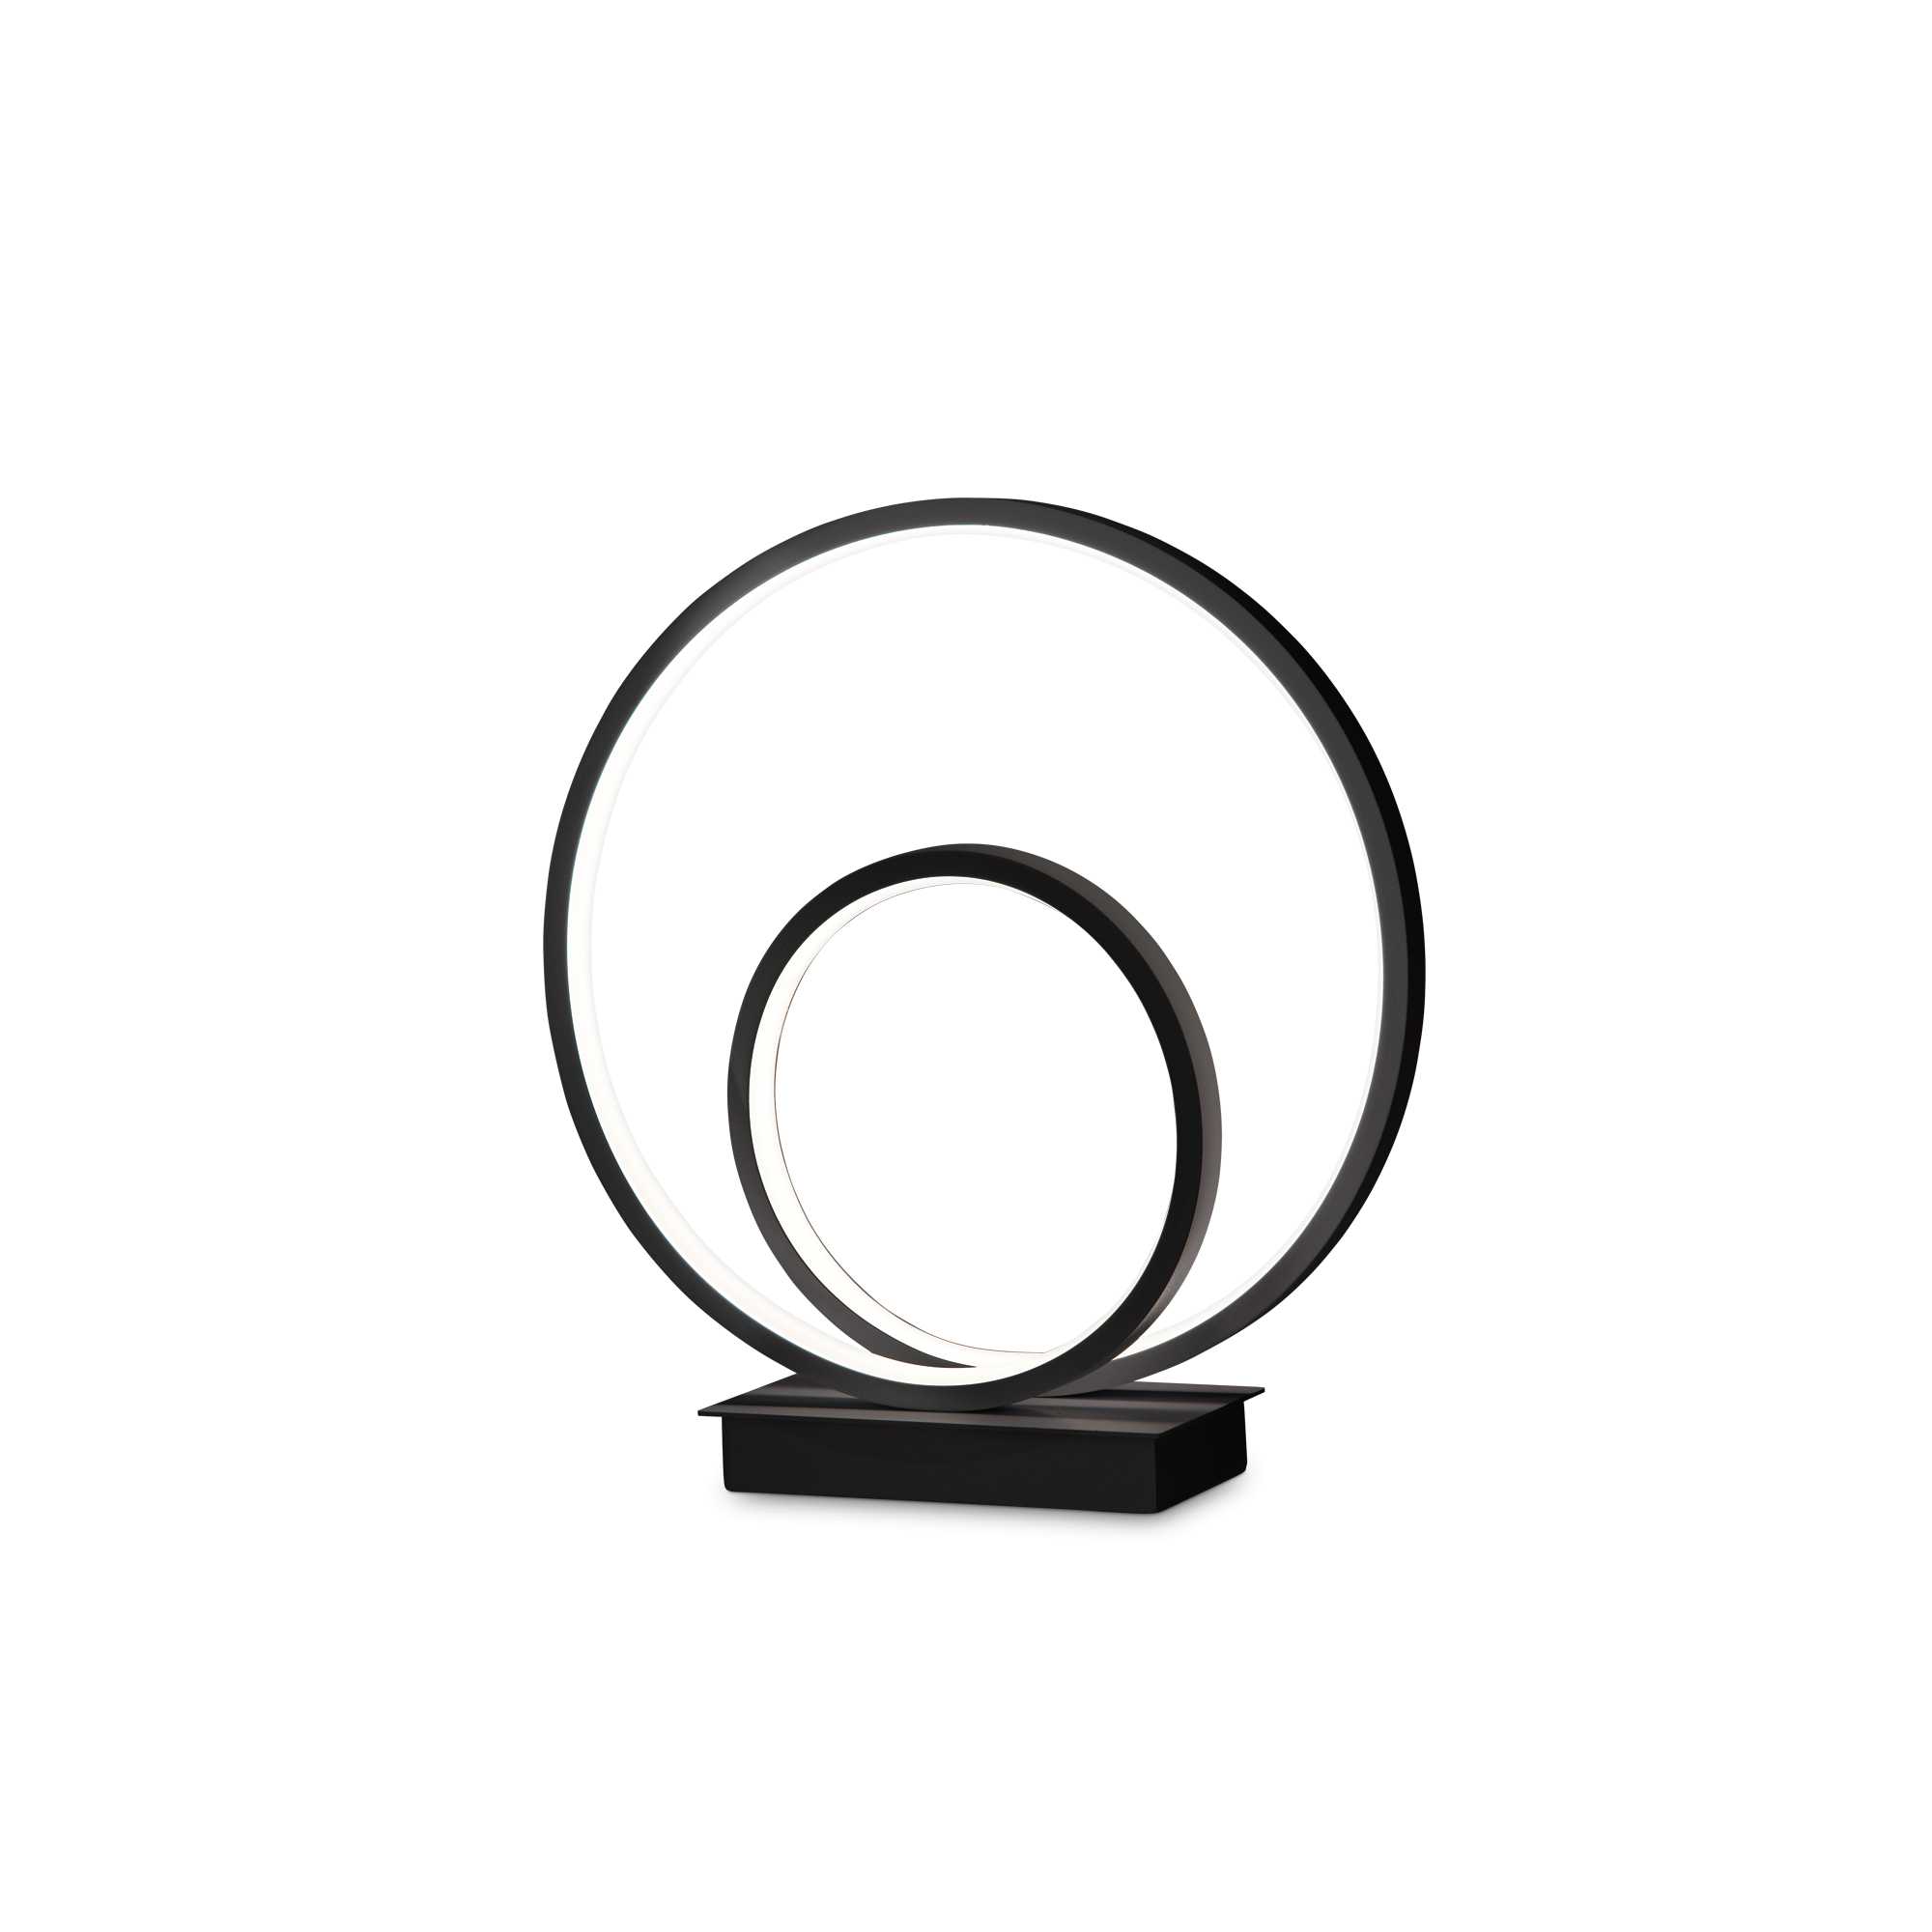 AD hotelska oprema Stolna lampa Oz tl on-off- Crne boje slika proizvoda